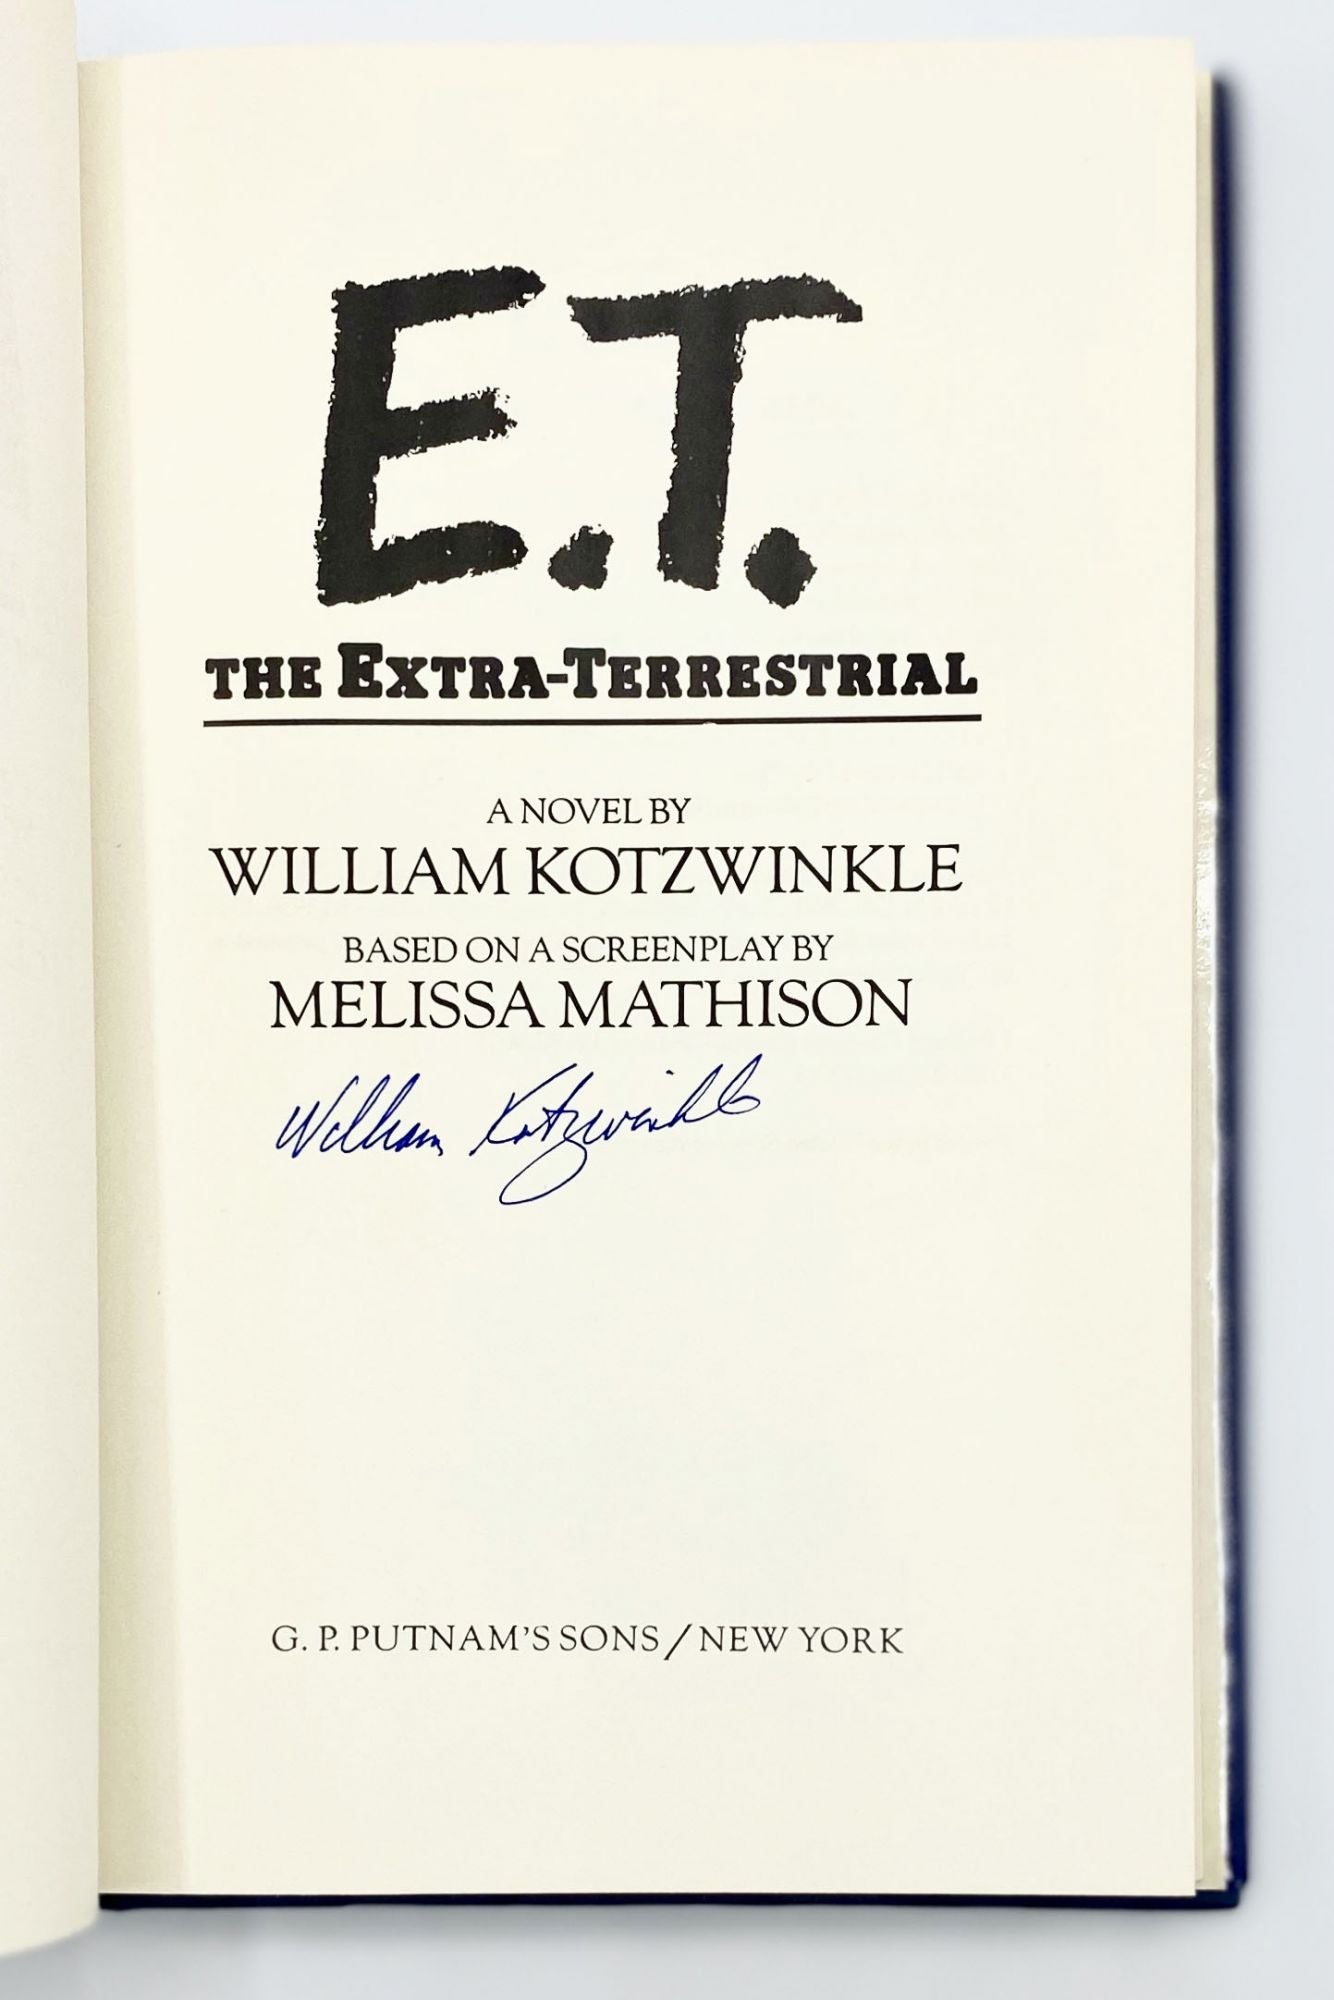 E.T. The Extra-Terrestrial by William Kotzwinkle, Steven Spielberg, Melissa  Mathison on Type Punch Matrix